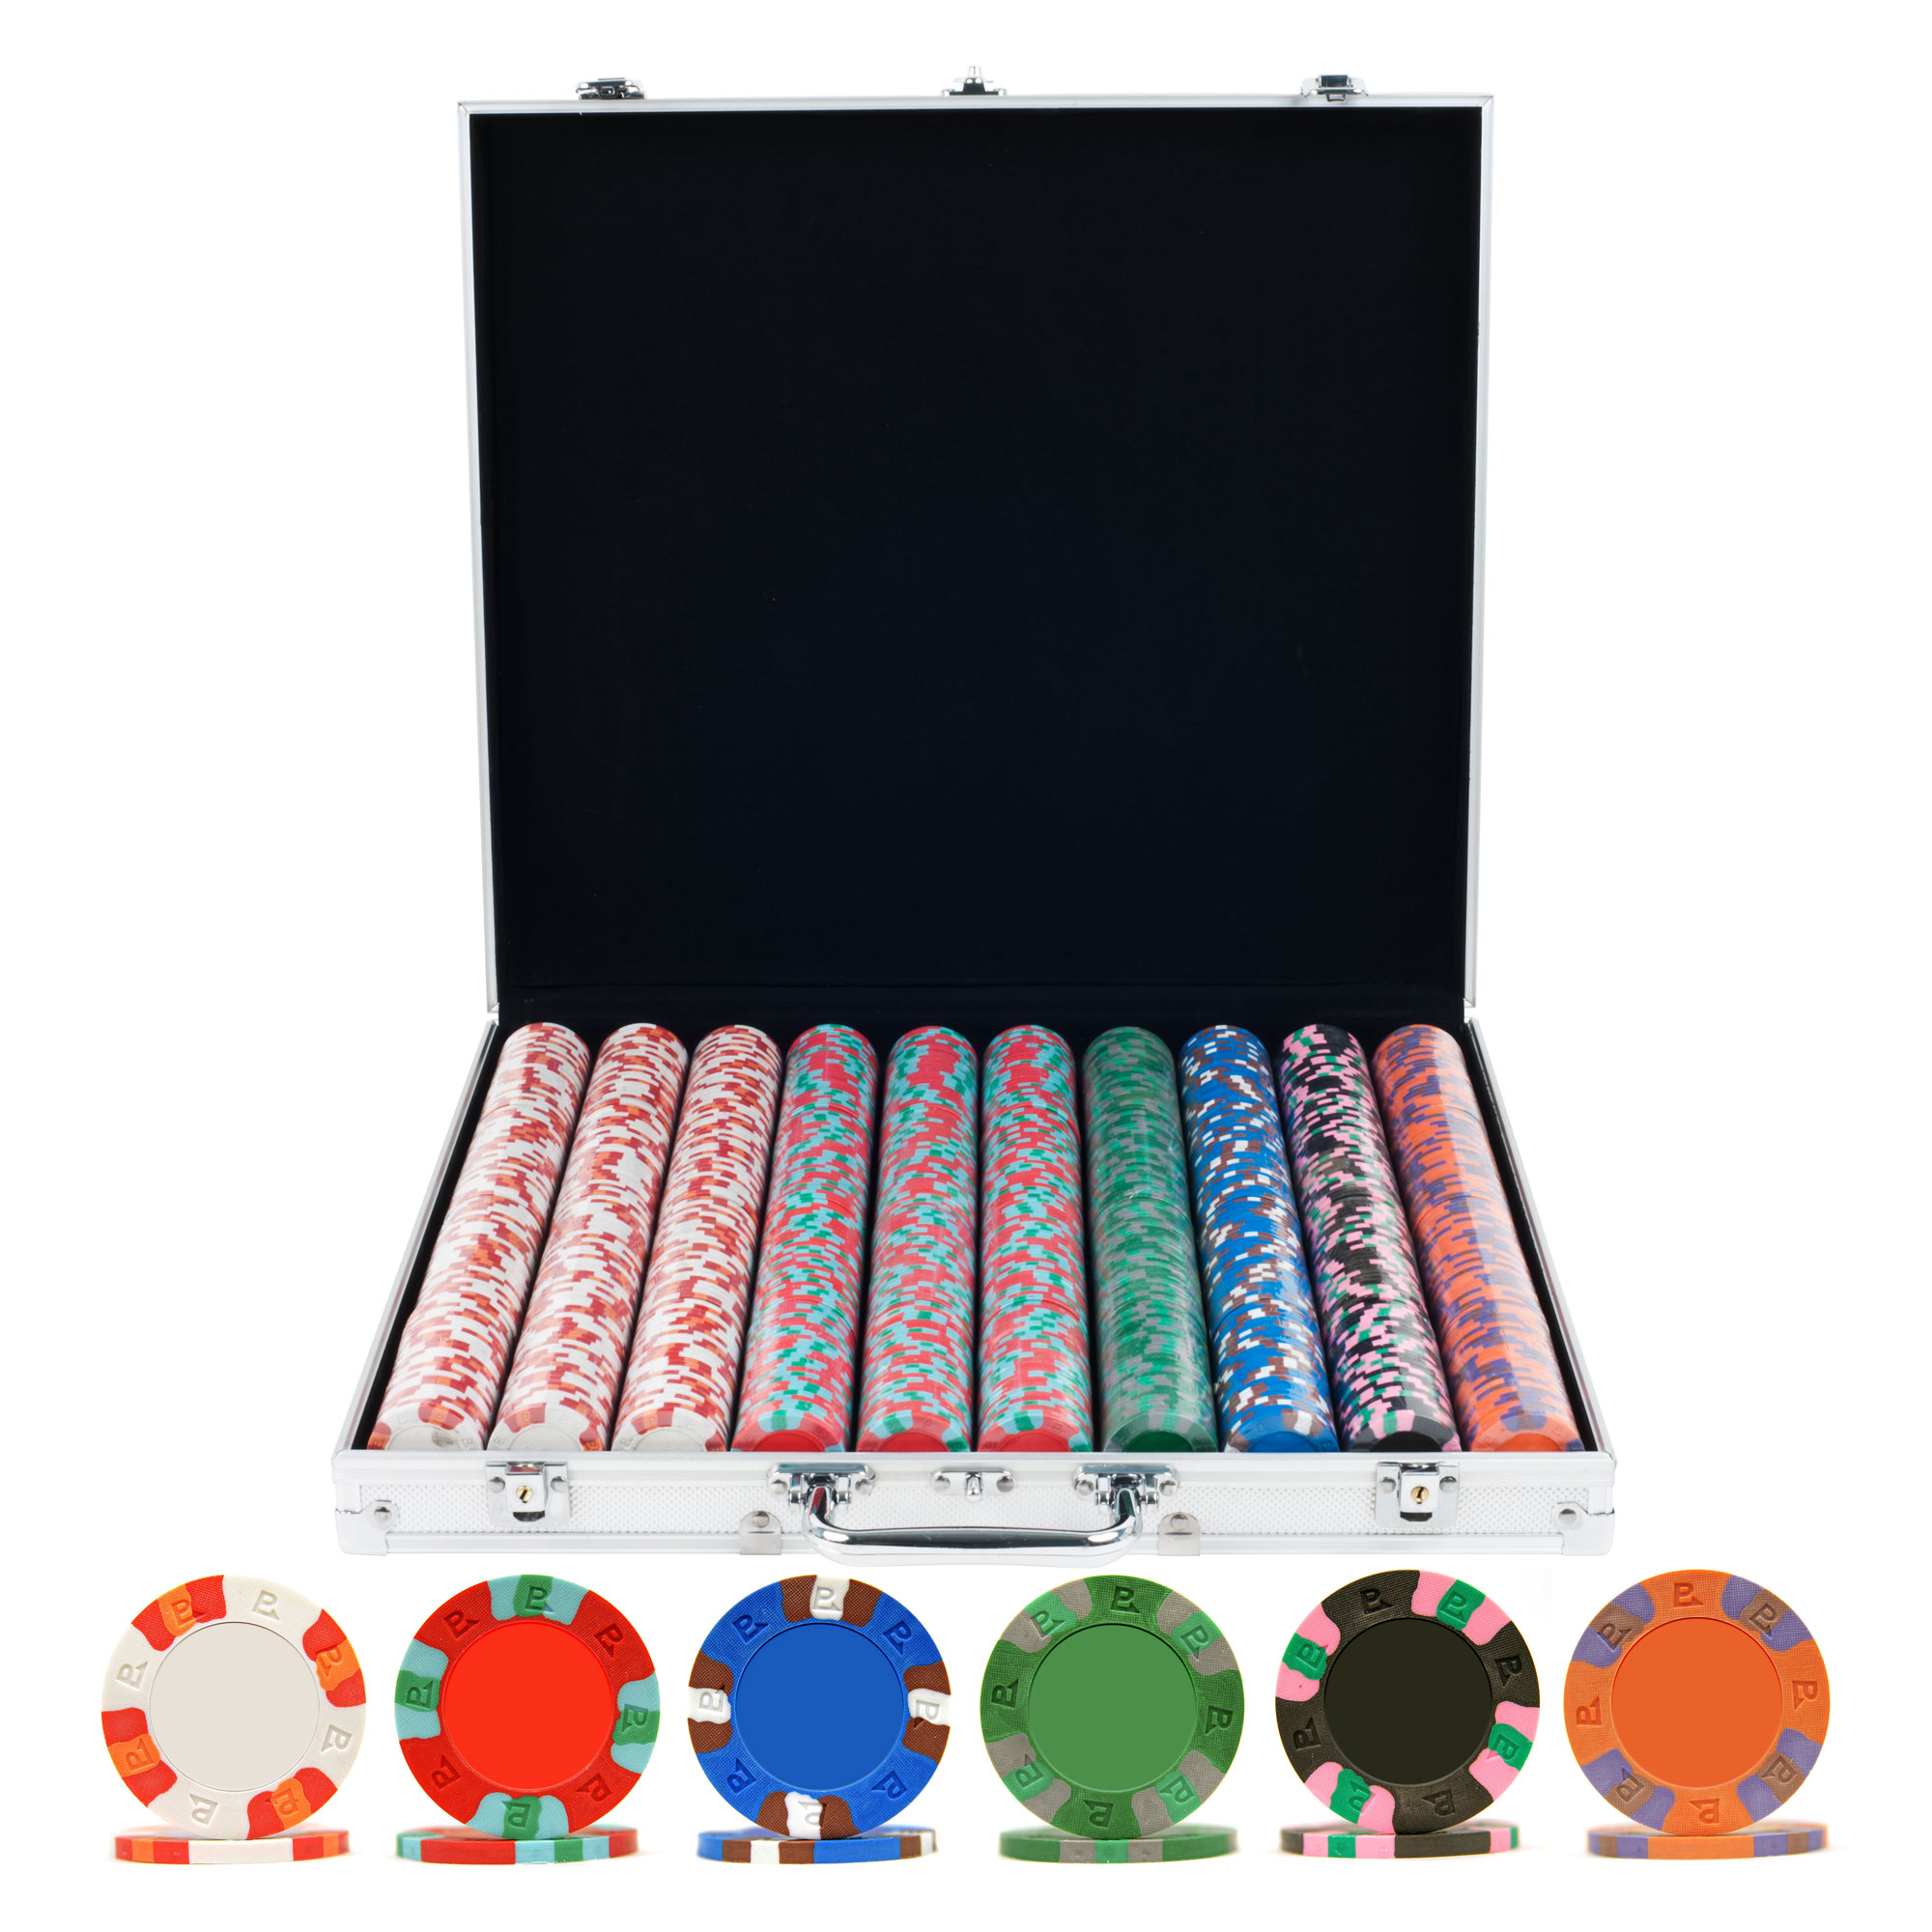 nexgen pro classic poker chip review